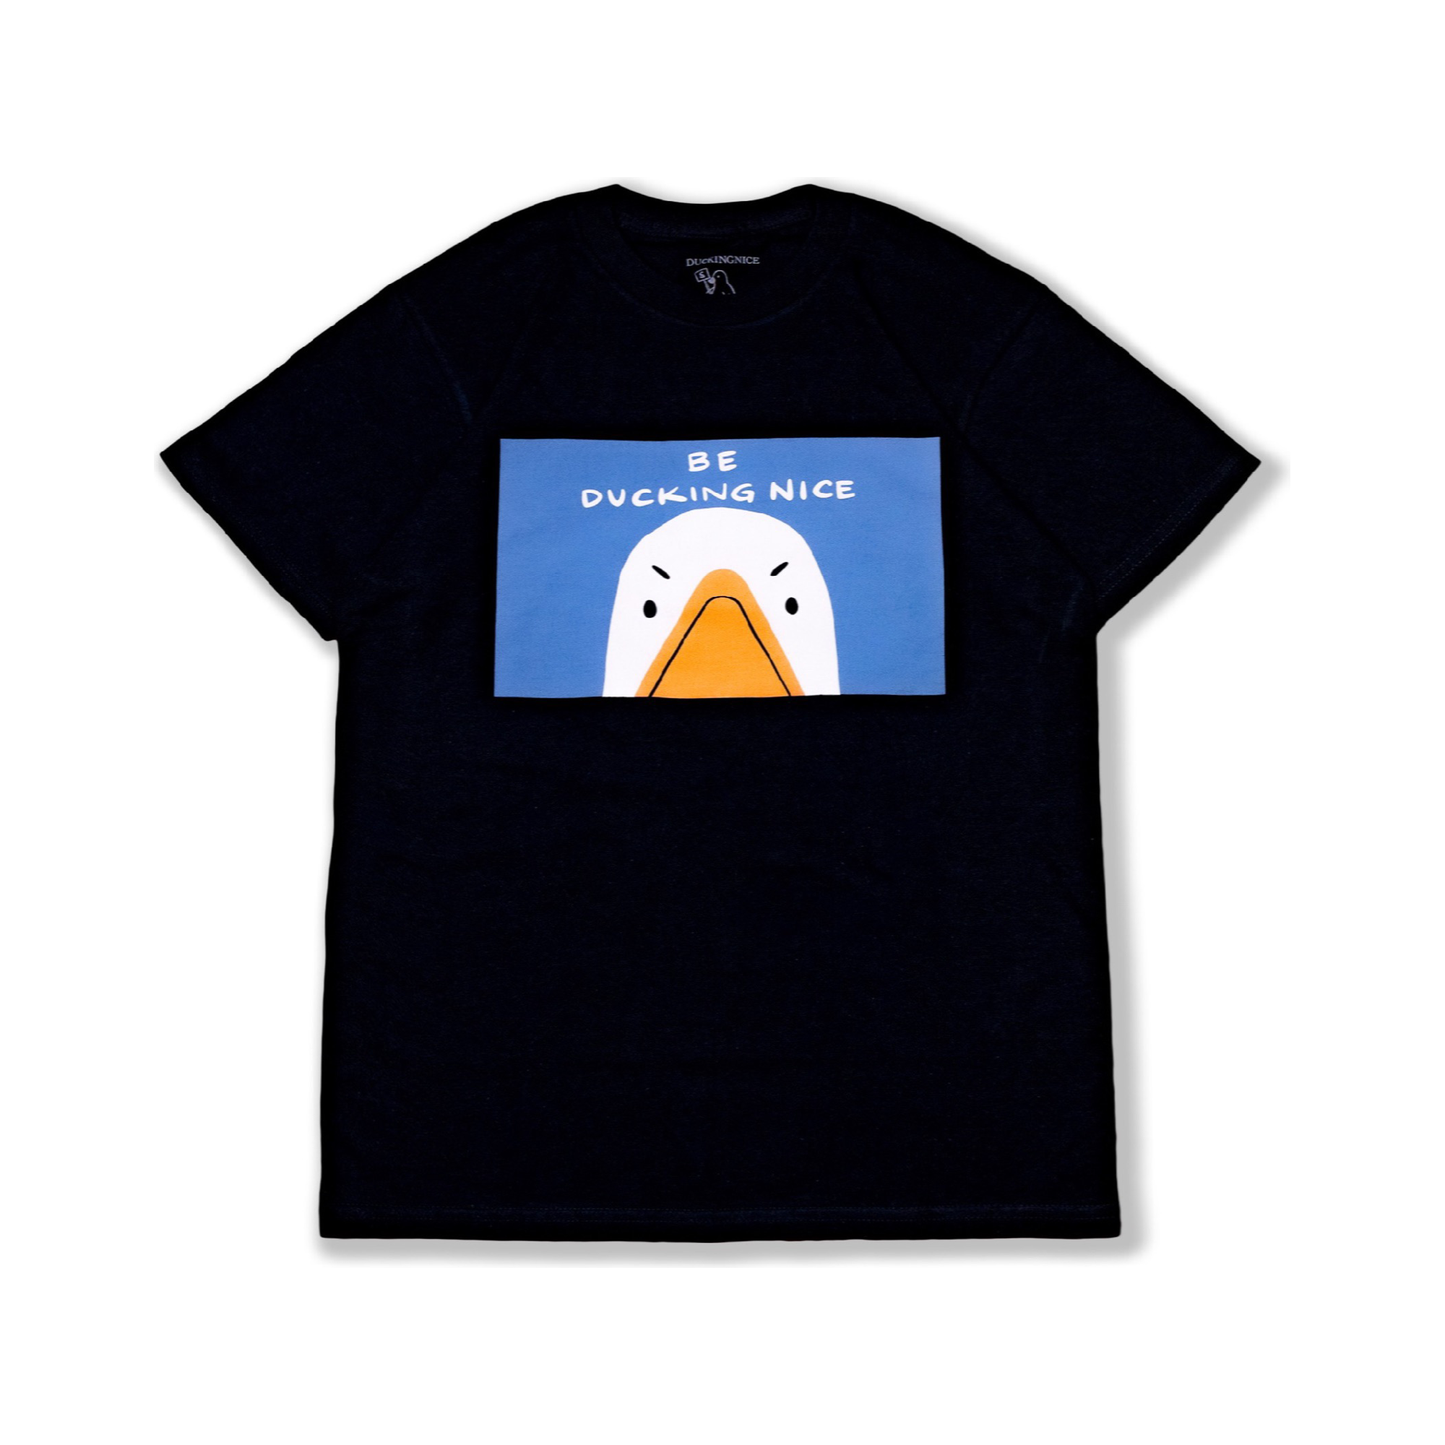 "Be Ducking Nice" Shirt